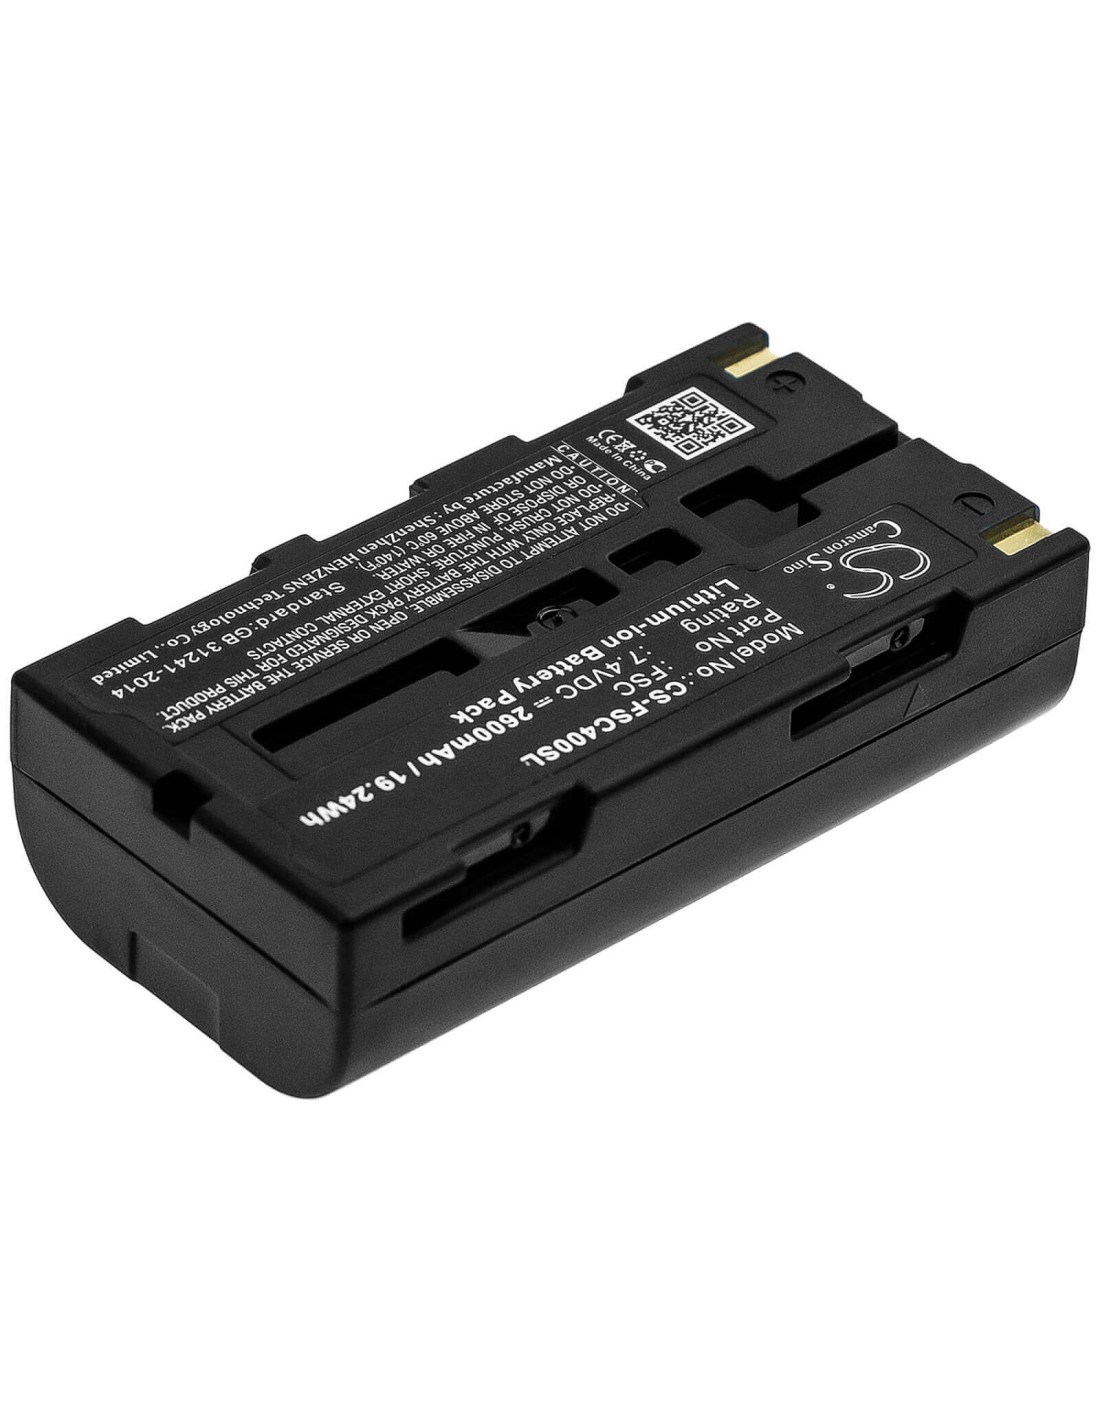 Battery for Fuji, Fsc, Fsc3, Fsc4 7.4V, 2600mAh - 19.24Wh